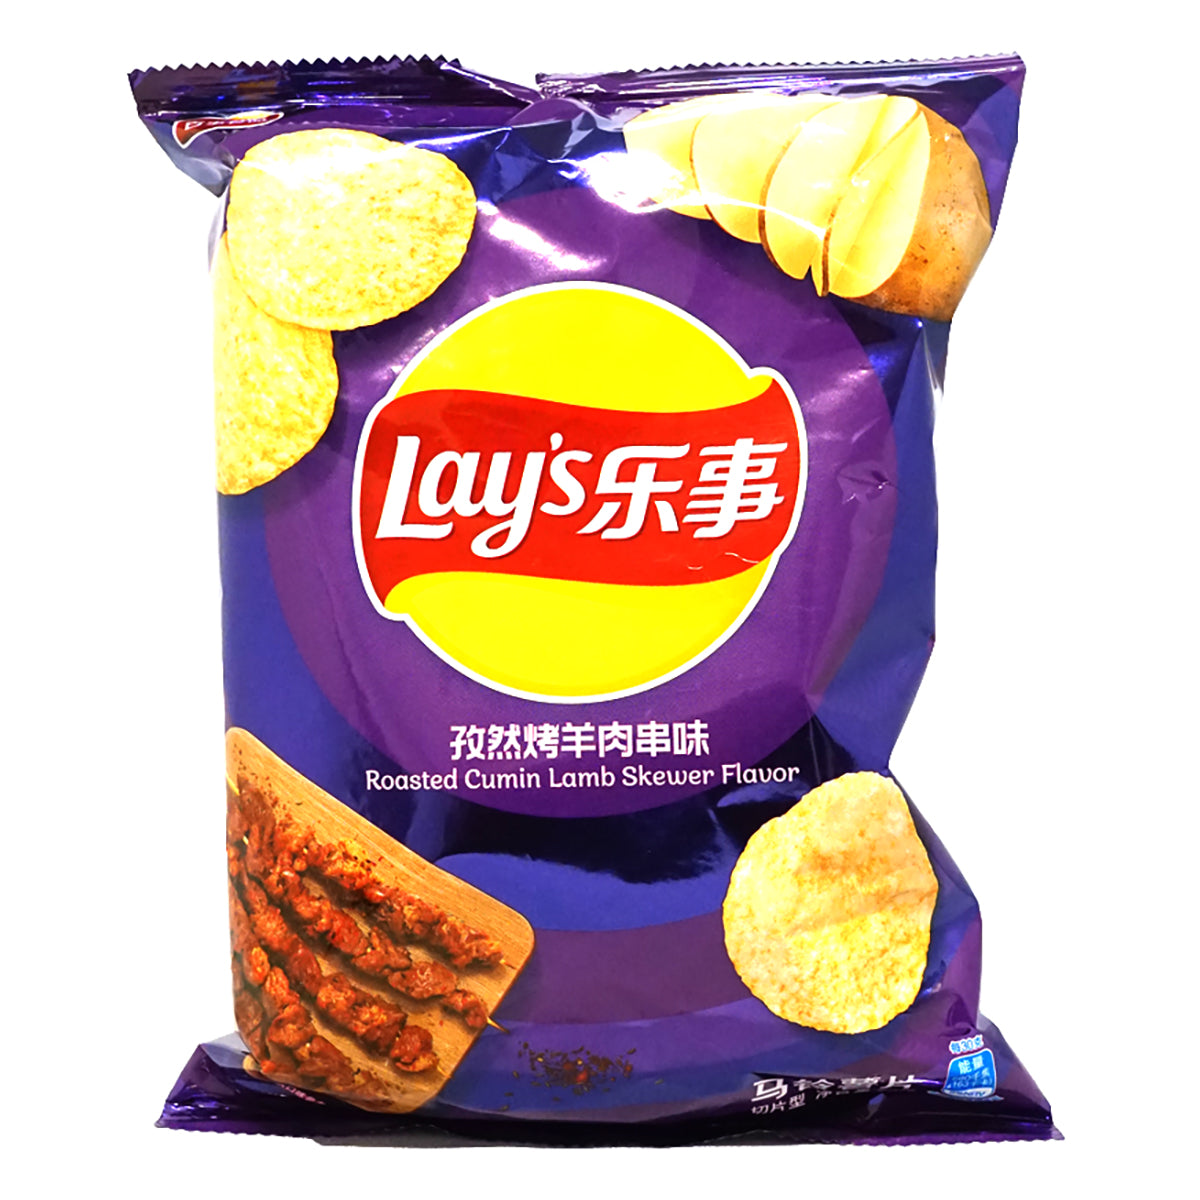 lay's potato chips roasted cumin lamb skewer flavor - 70g